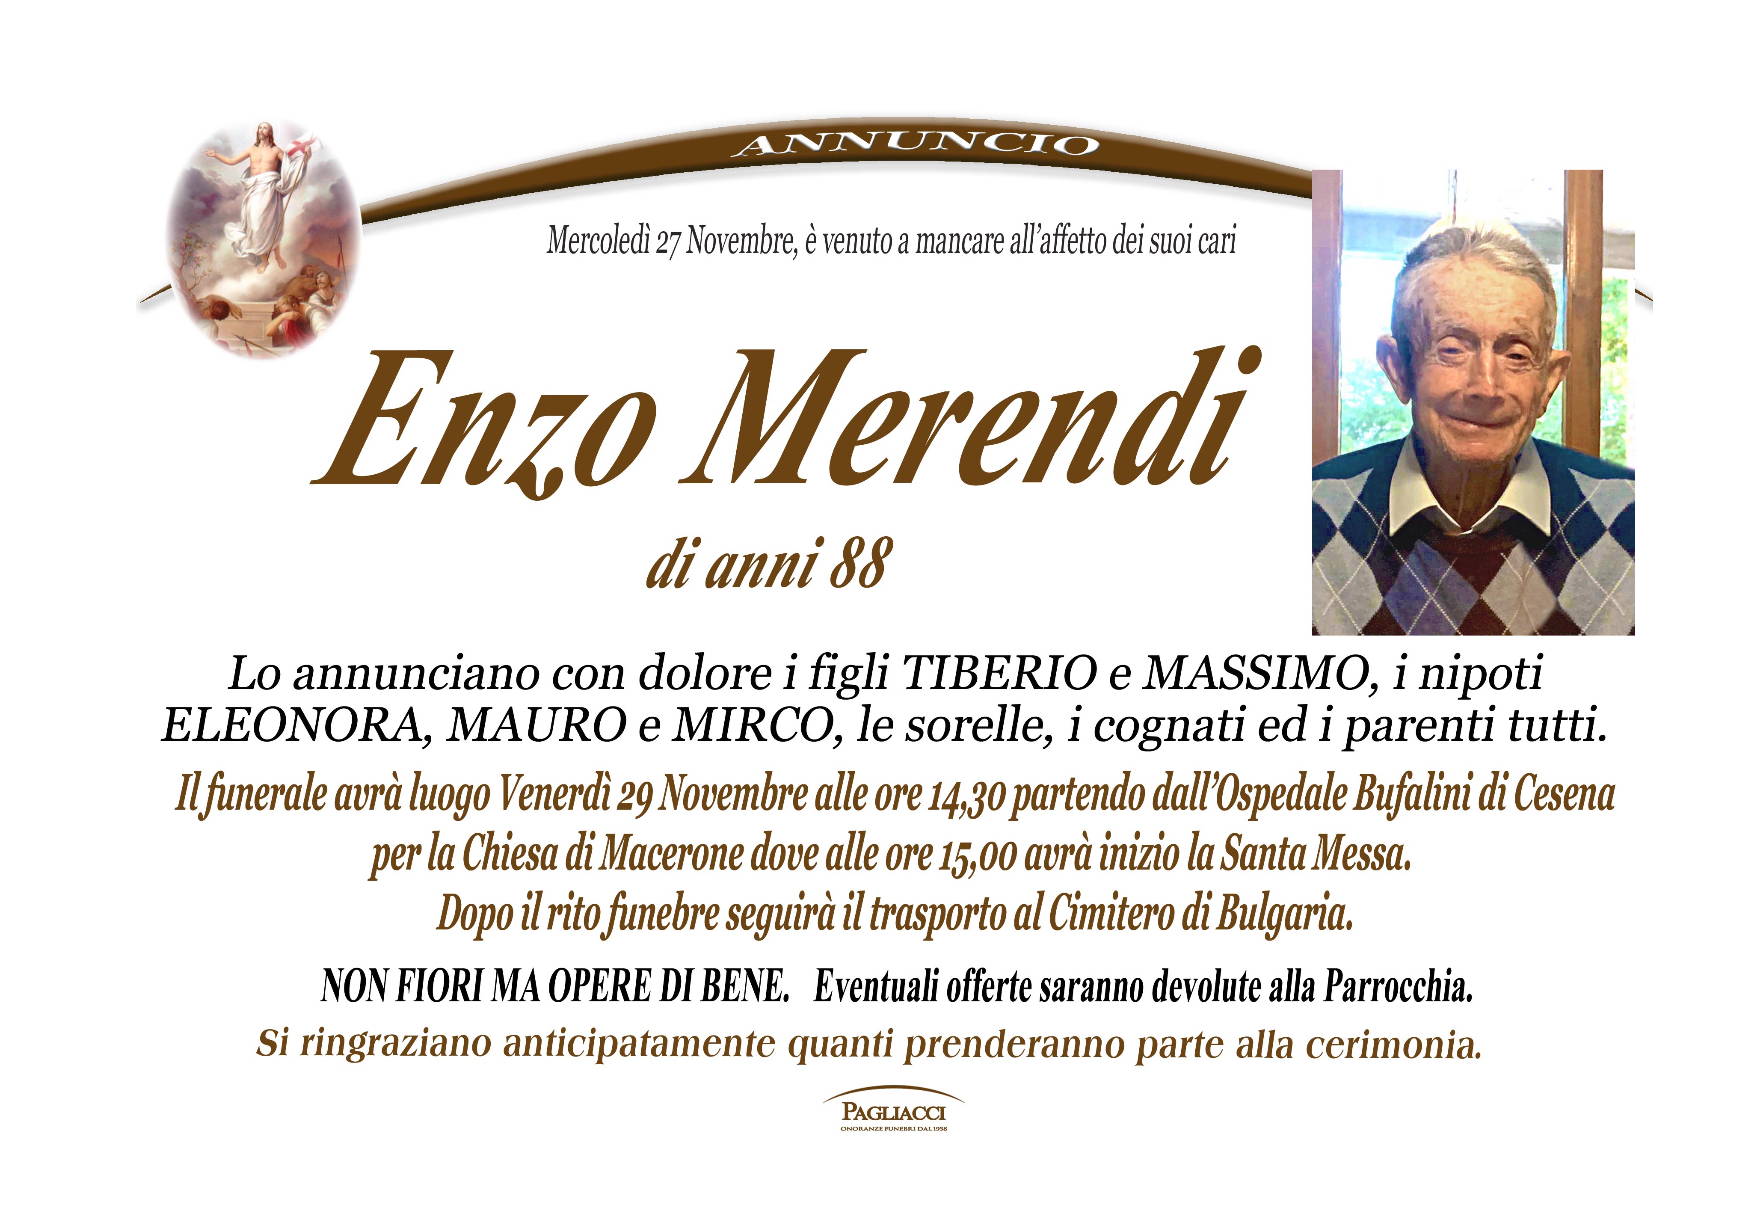 Enzo Merendi